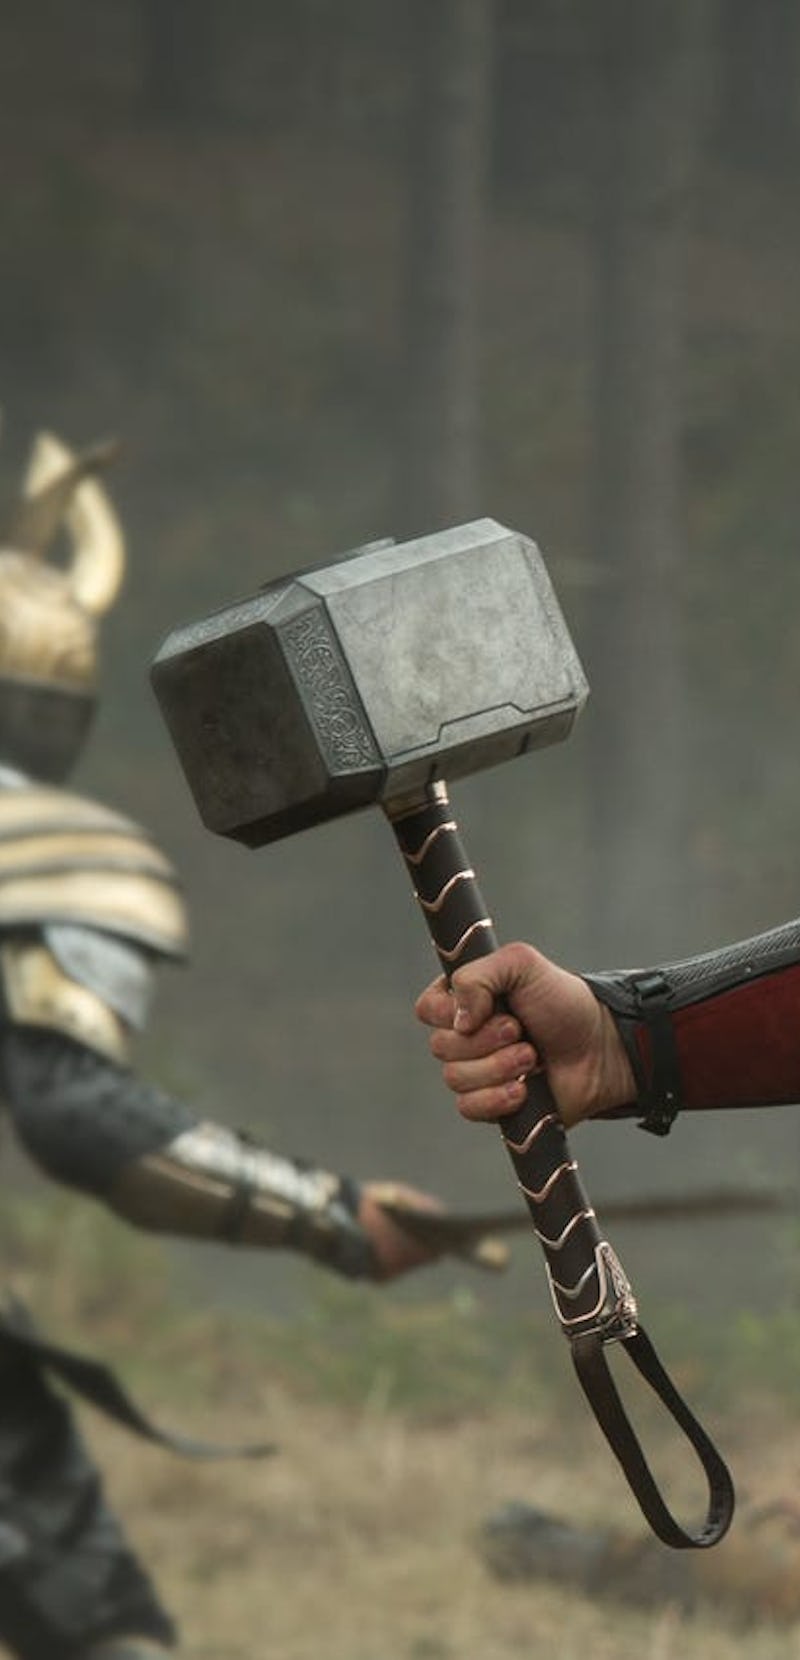 Chris Hemsworth as Thor holding his hammer Mjolnir